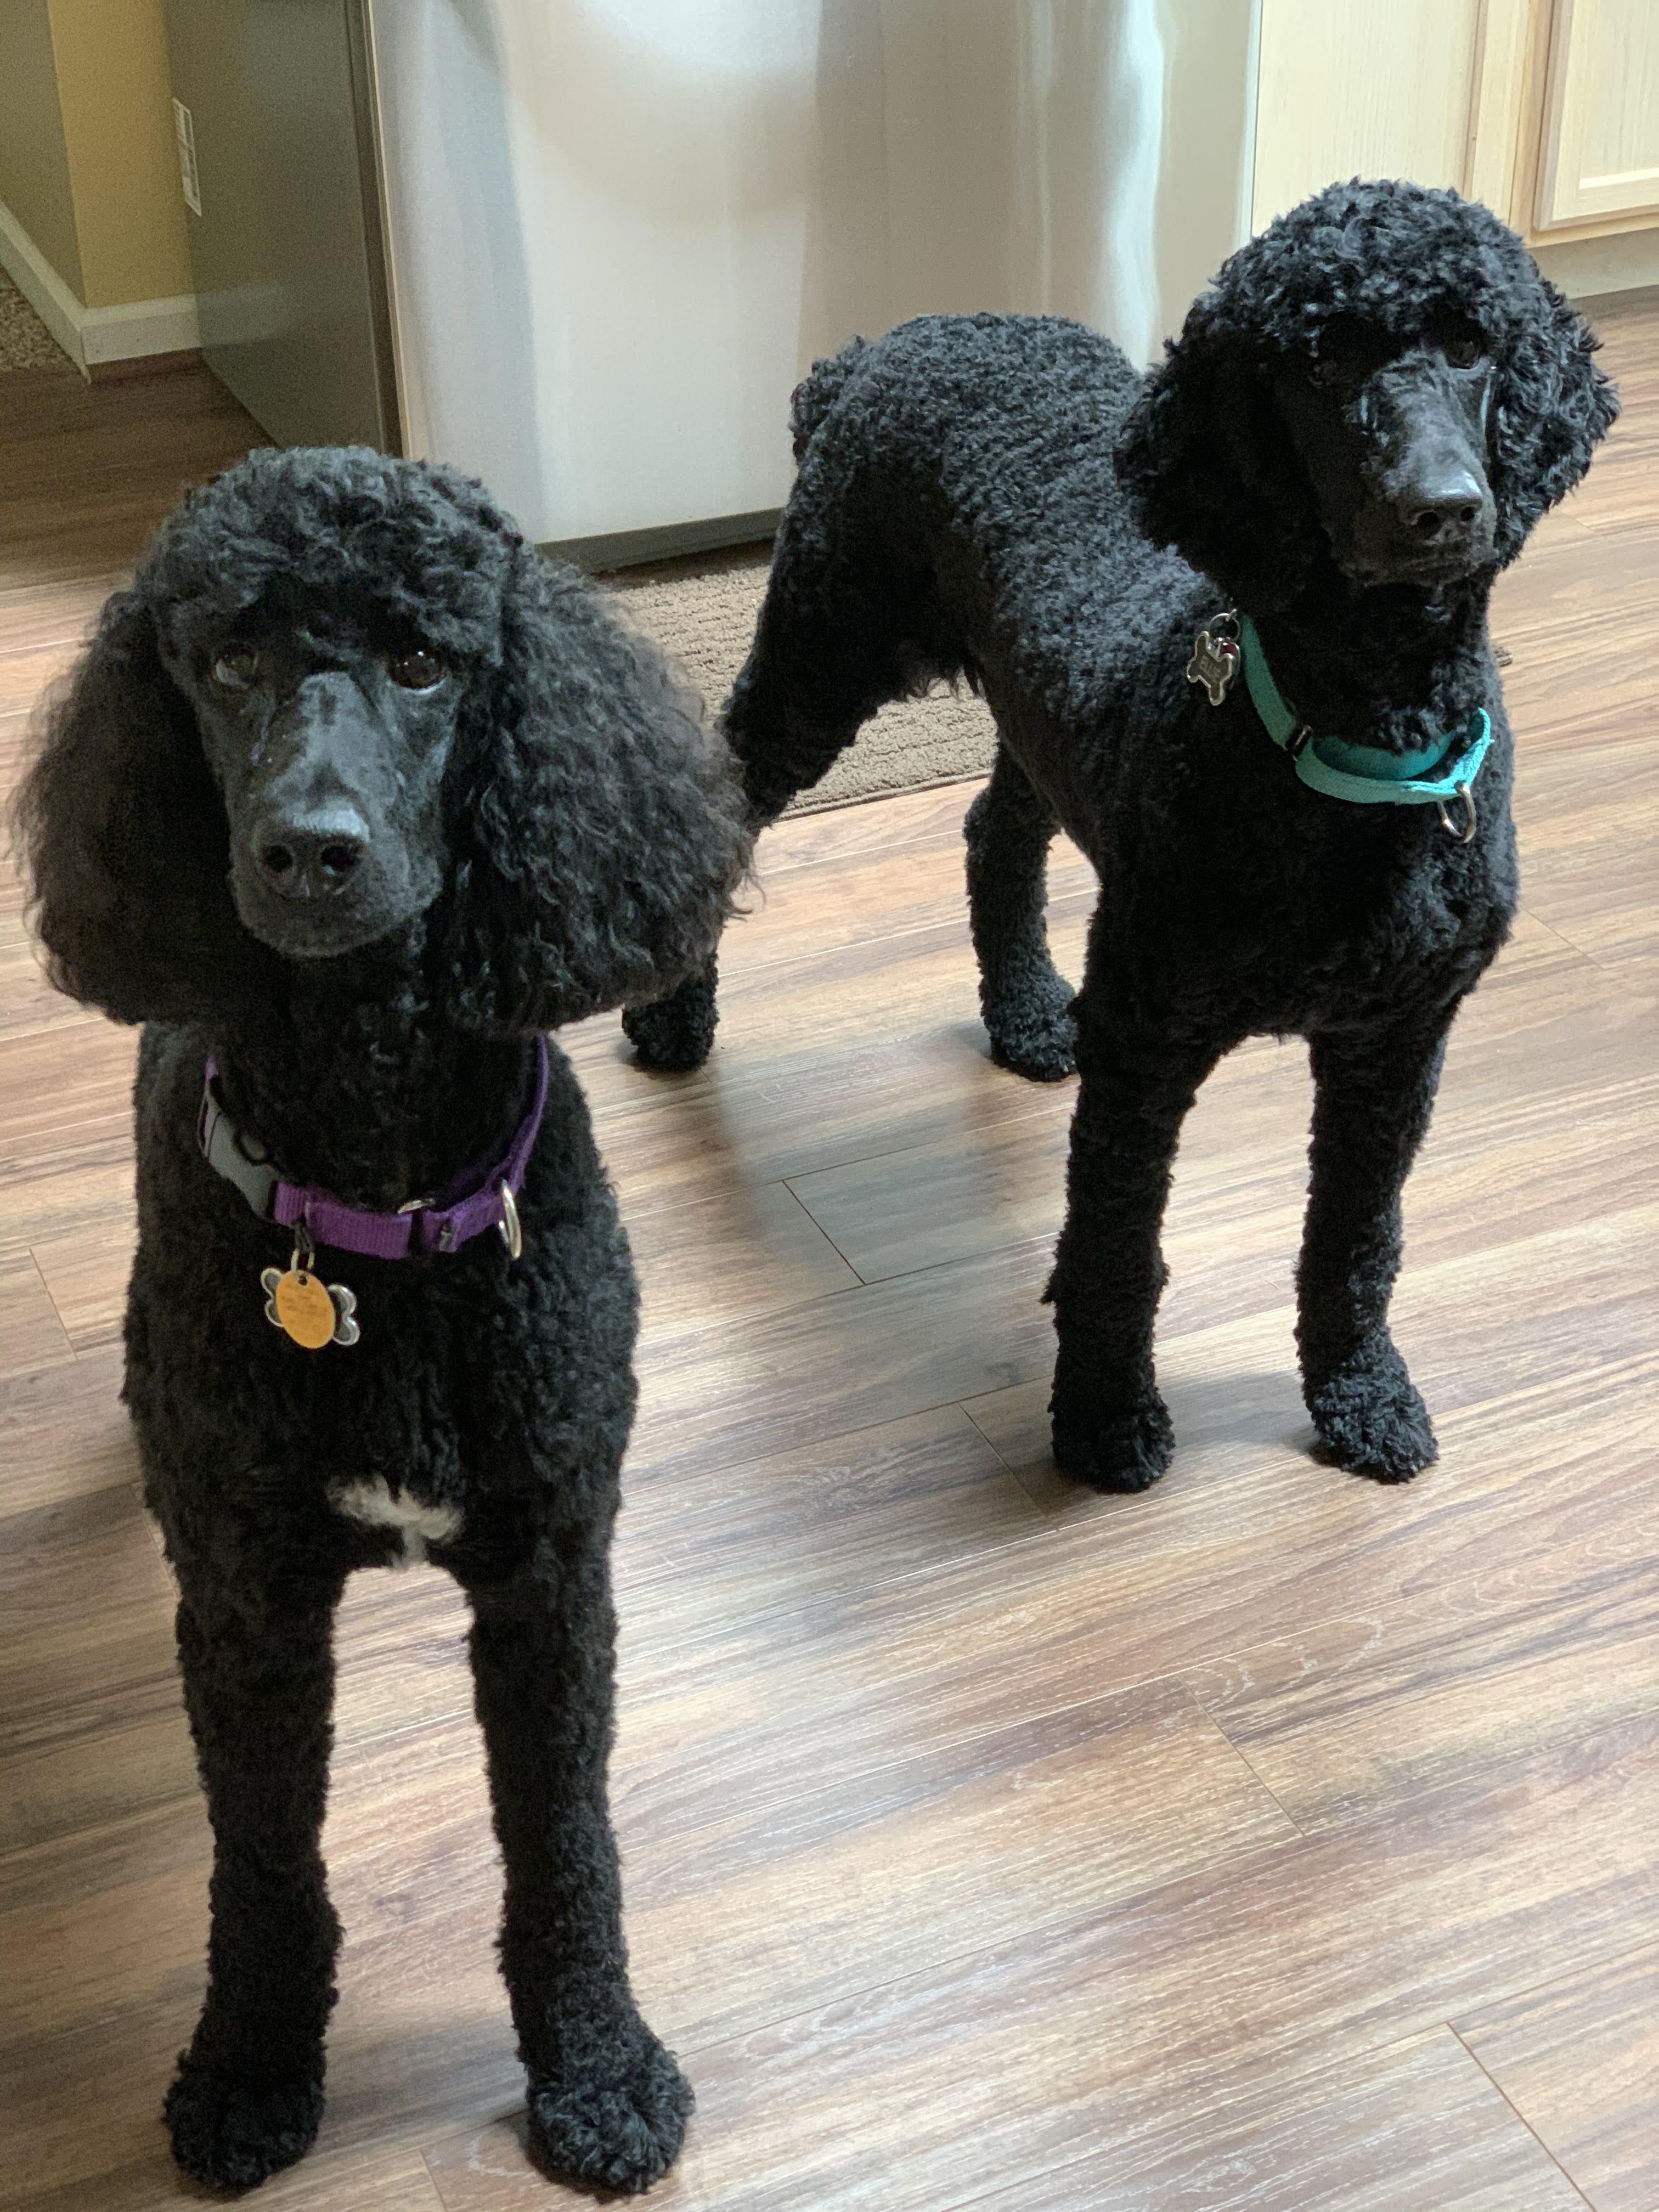 Two large black poodles.